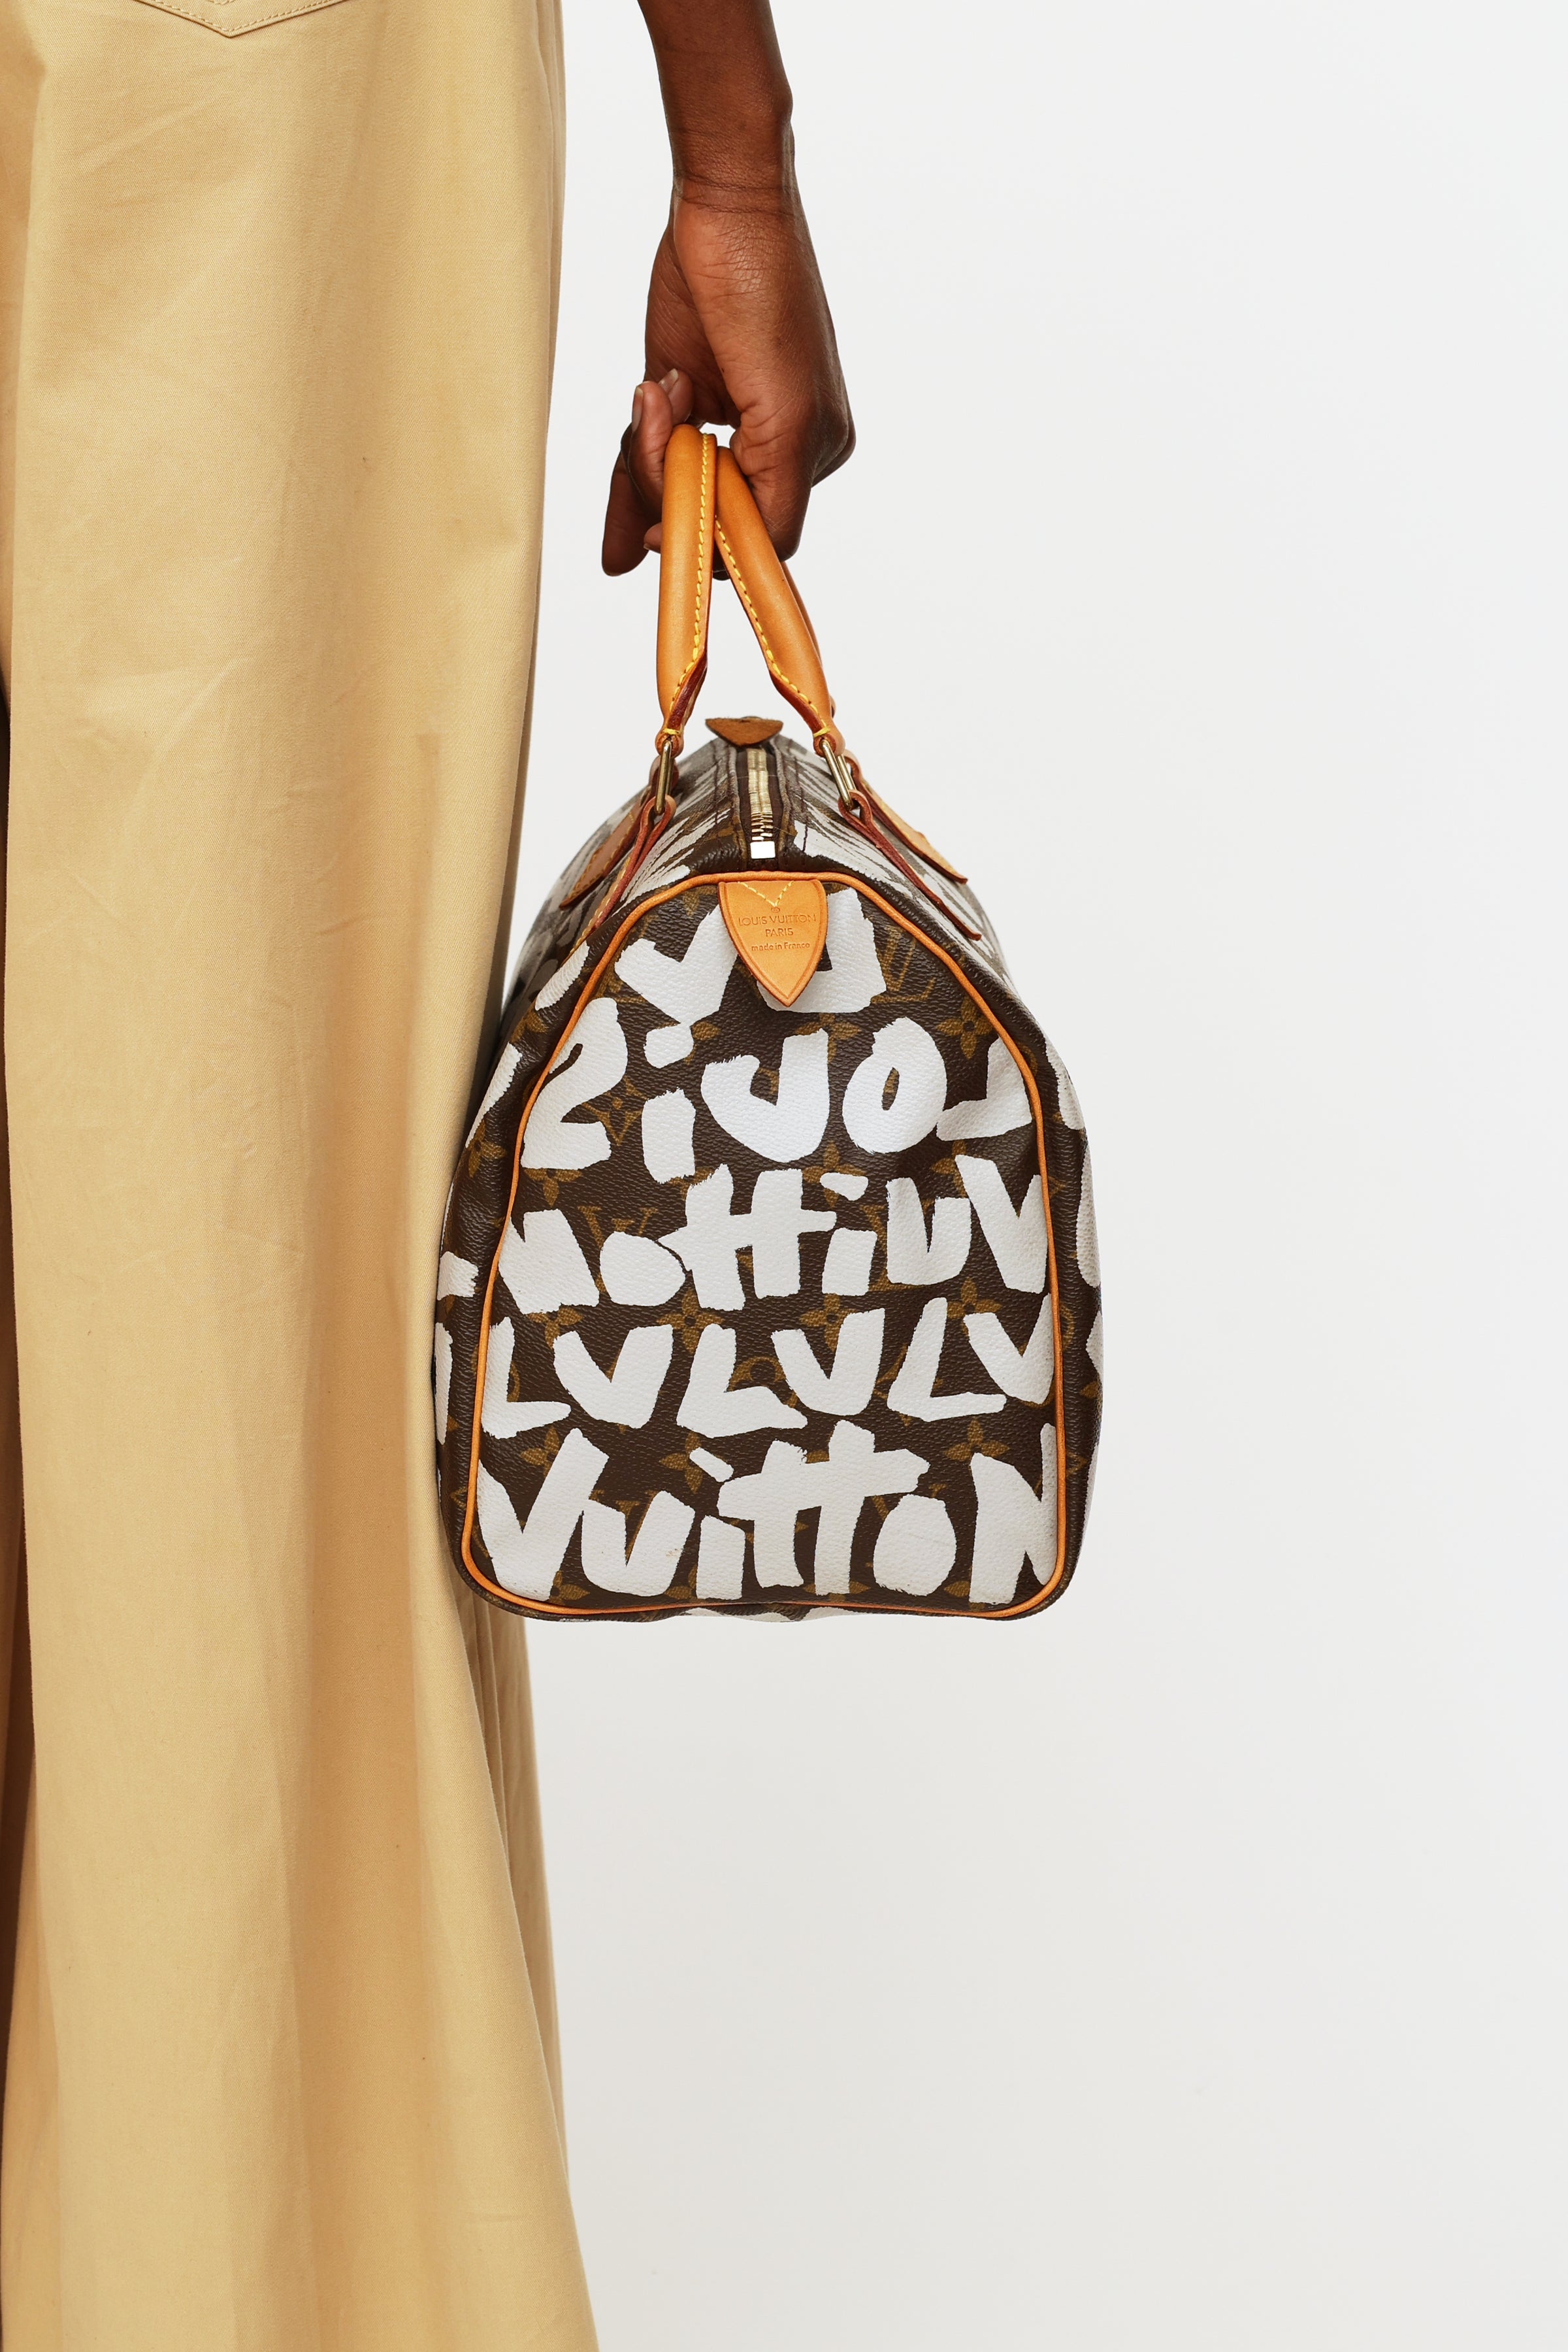 Louis Vuitton x Stephen Sprouse Limited Edition Graffiti Speedy 30 - shop 